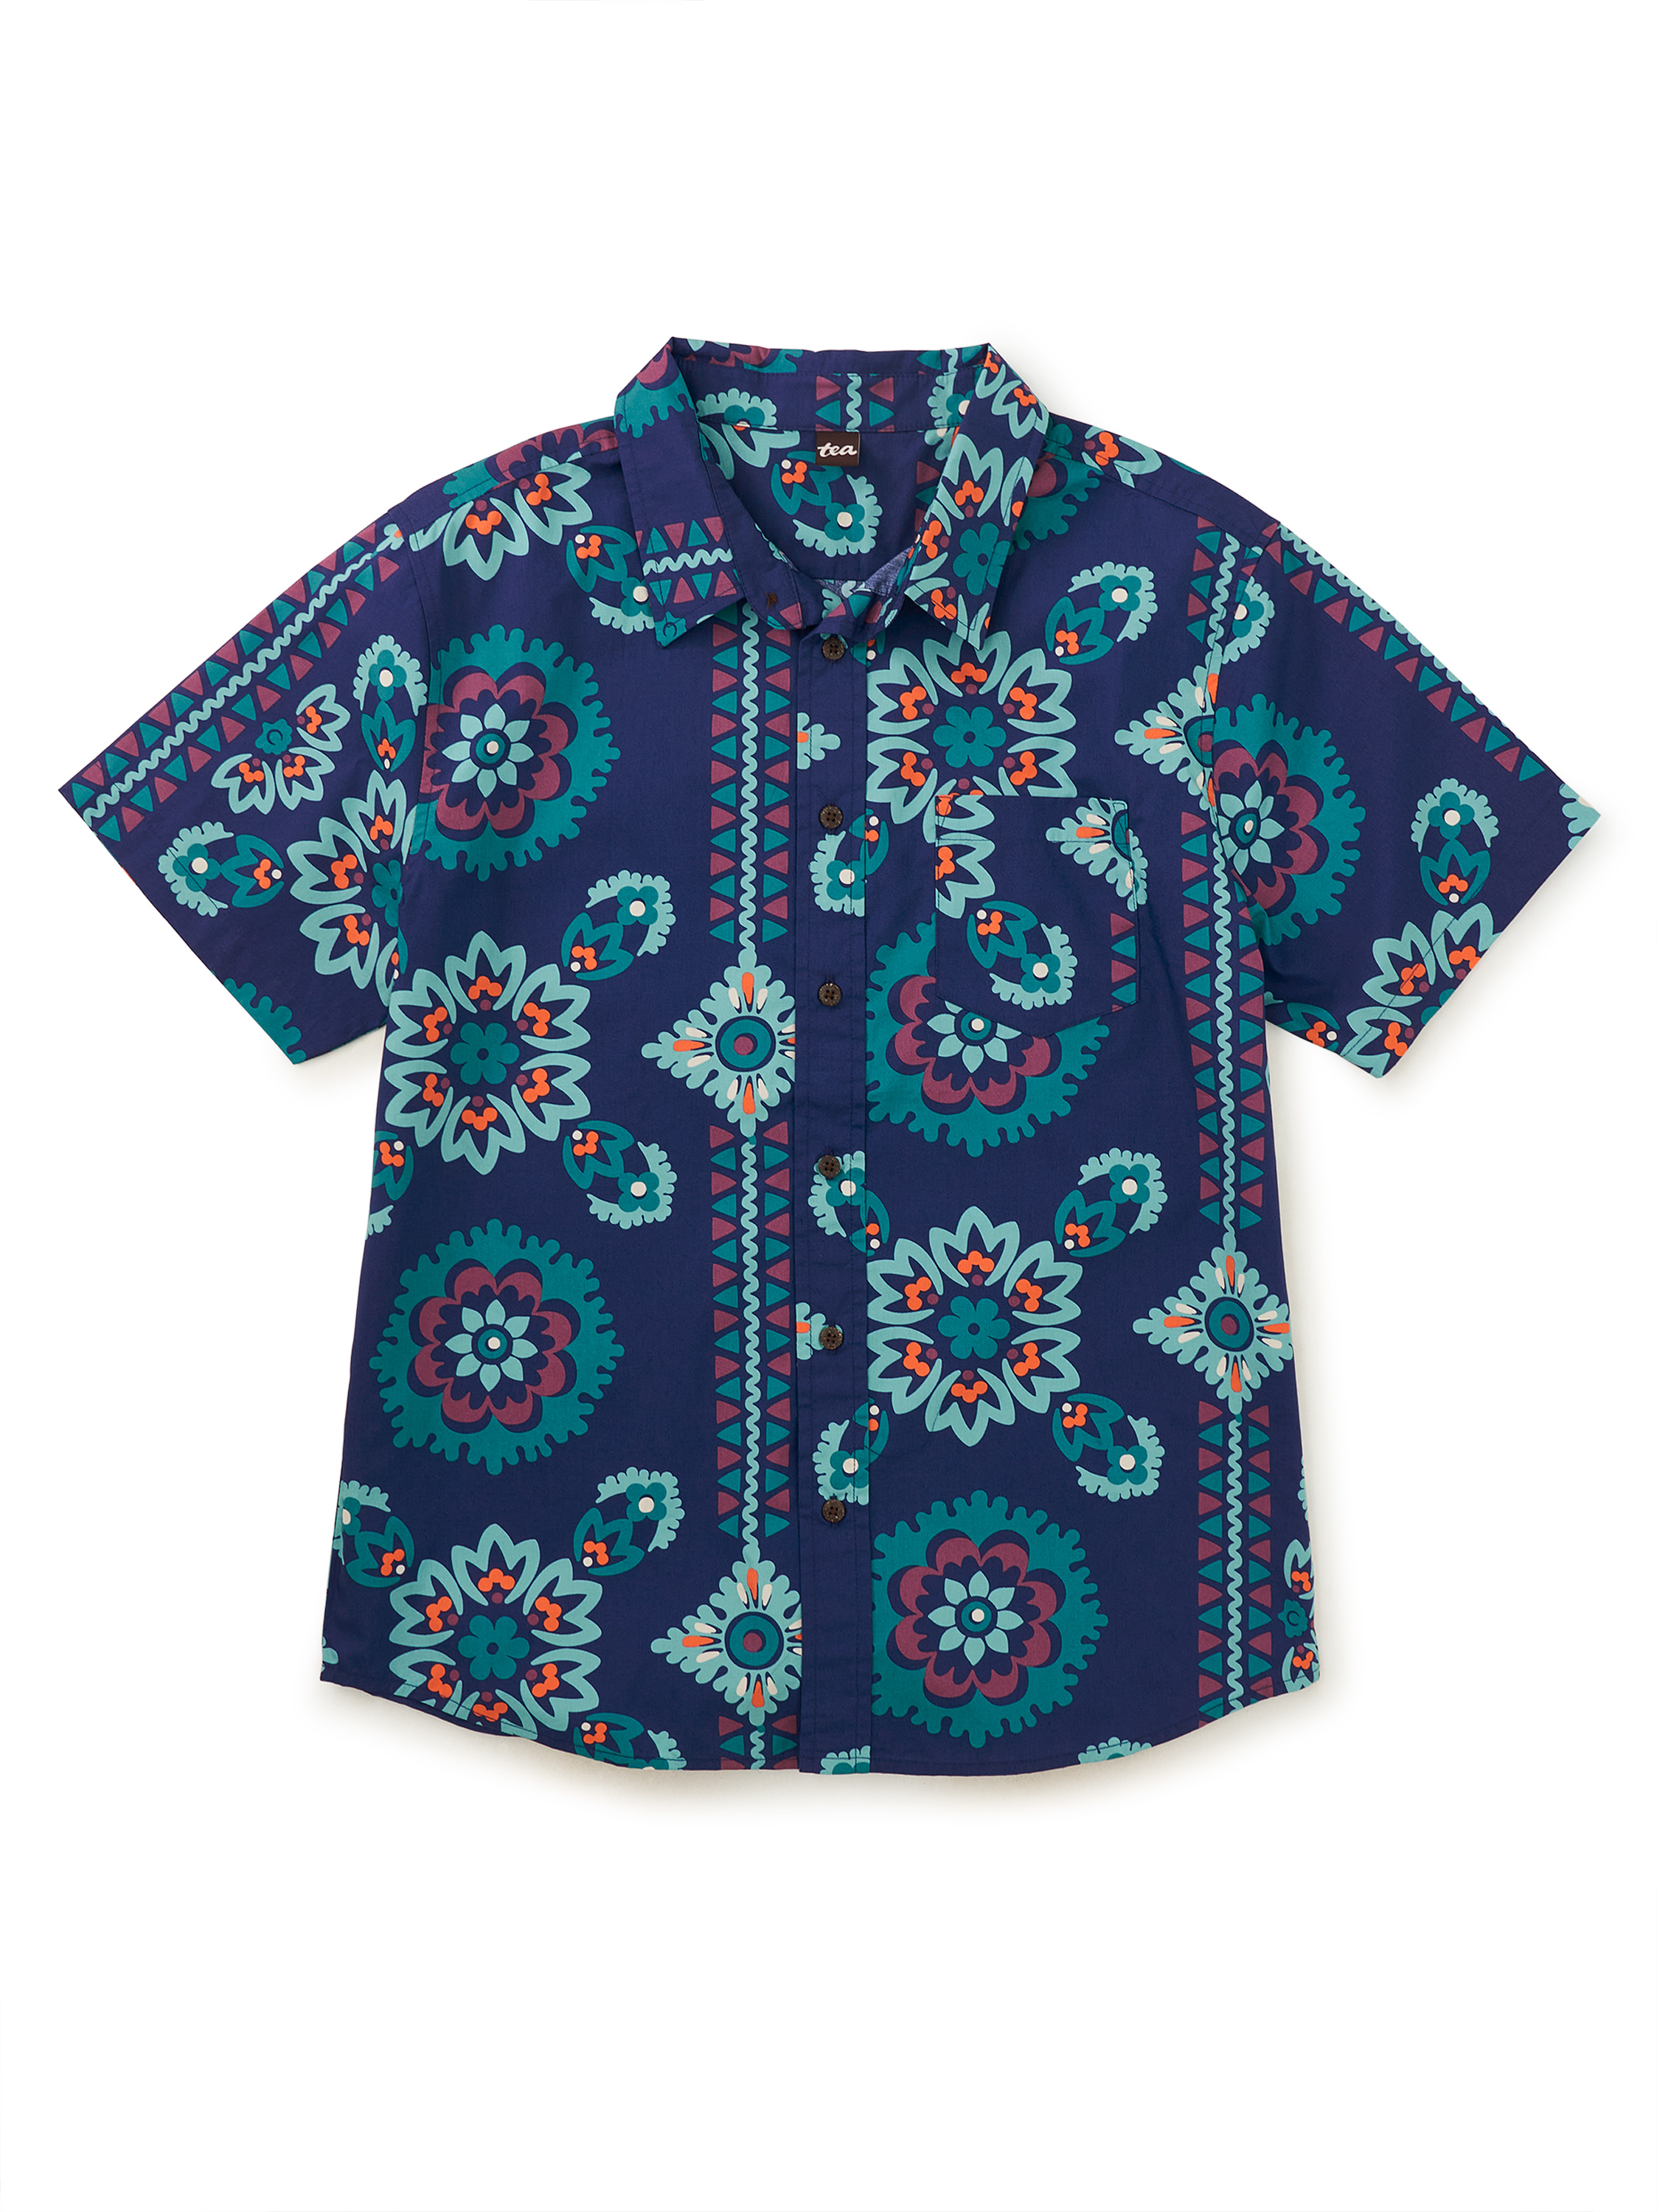 Adult Button-Up Woven Shirt